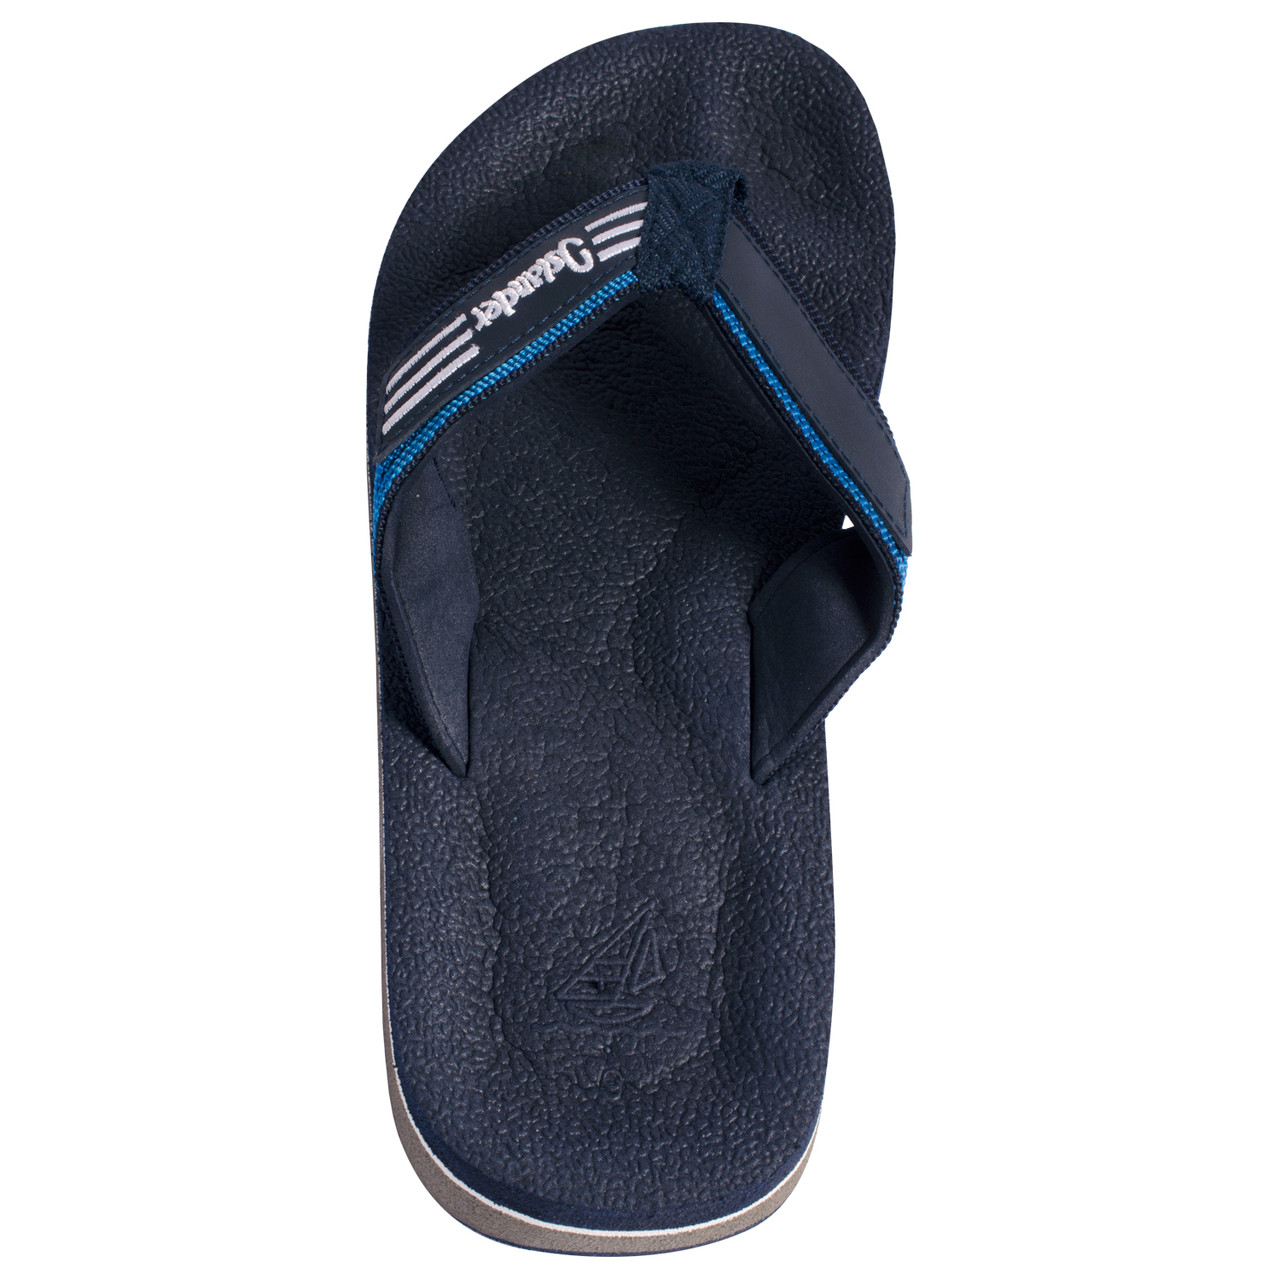 Islander All-Weather Flip-Flop Sandals product image